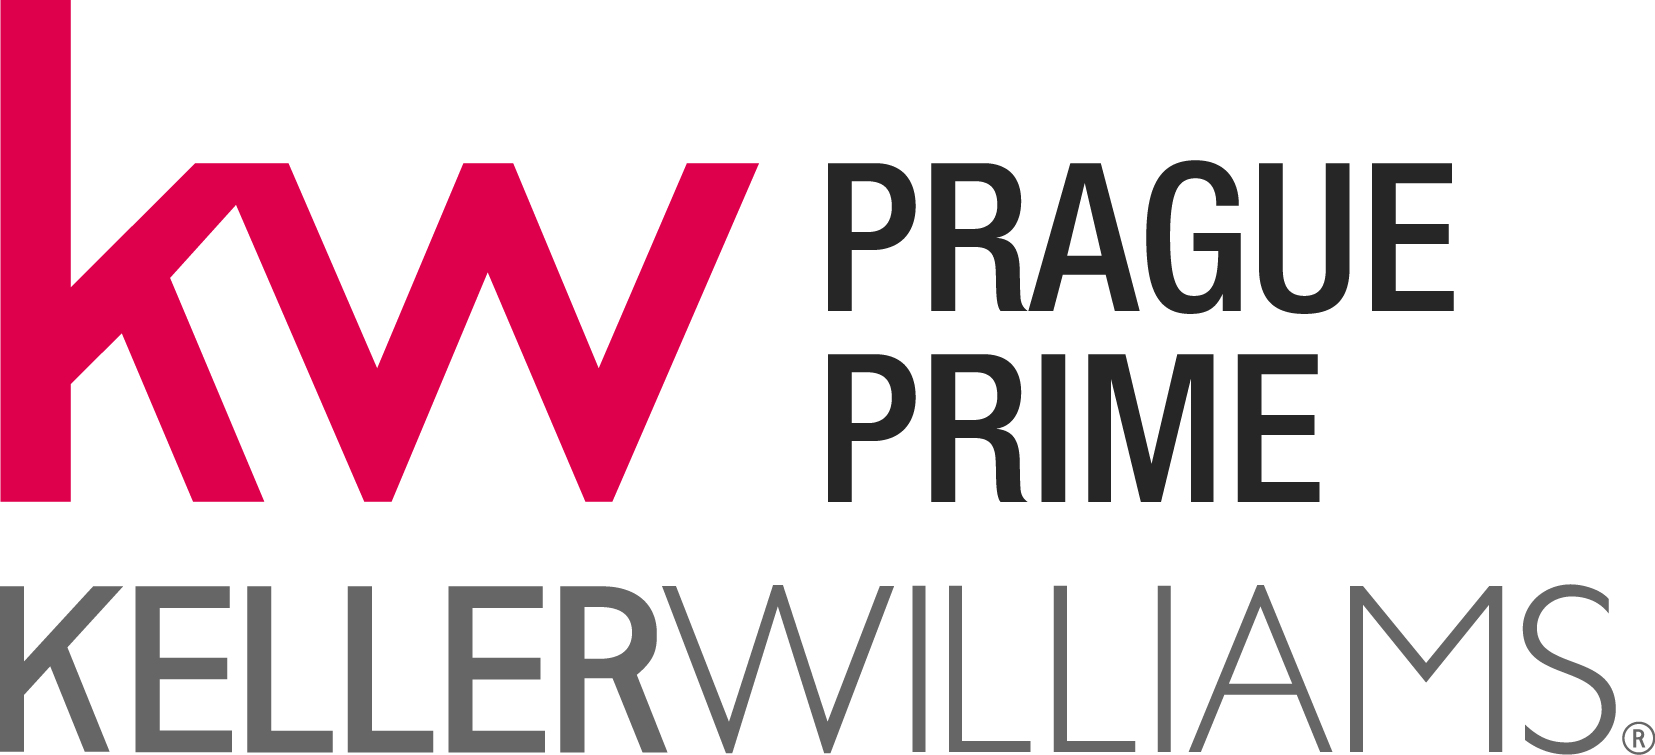 Keller Williams Prague Prime